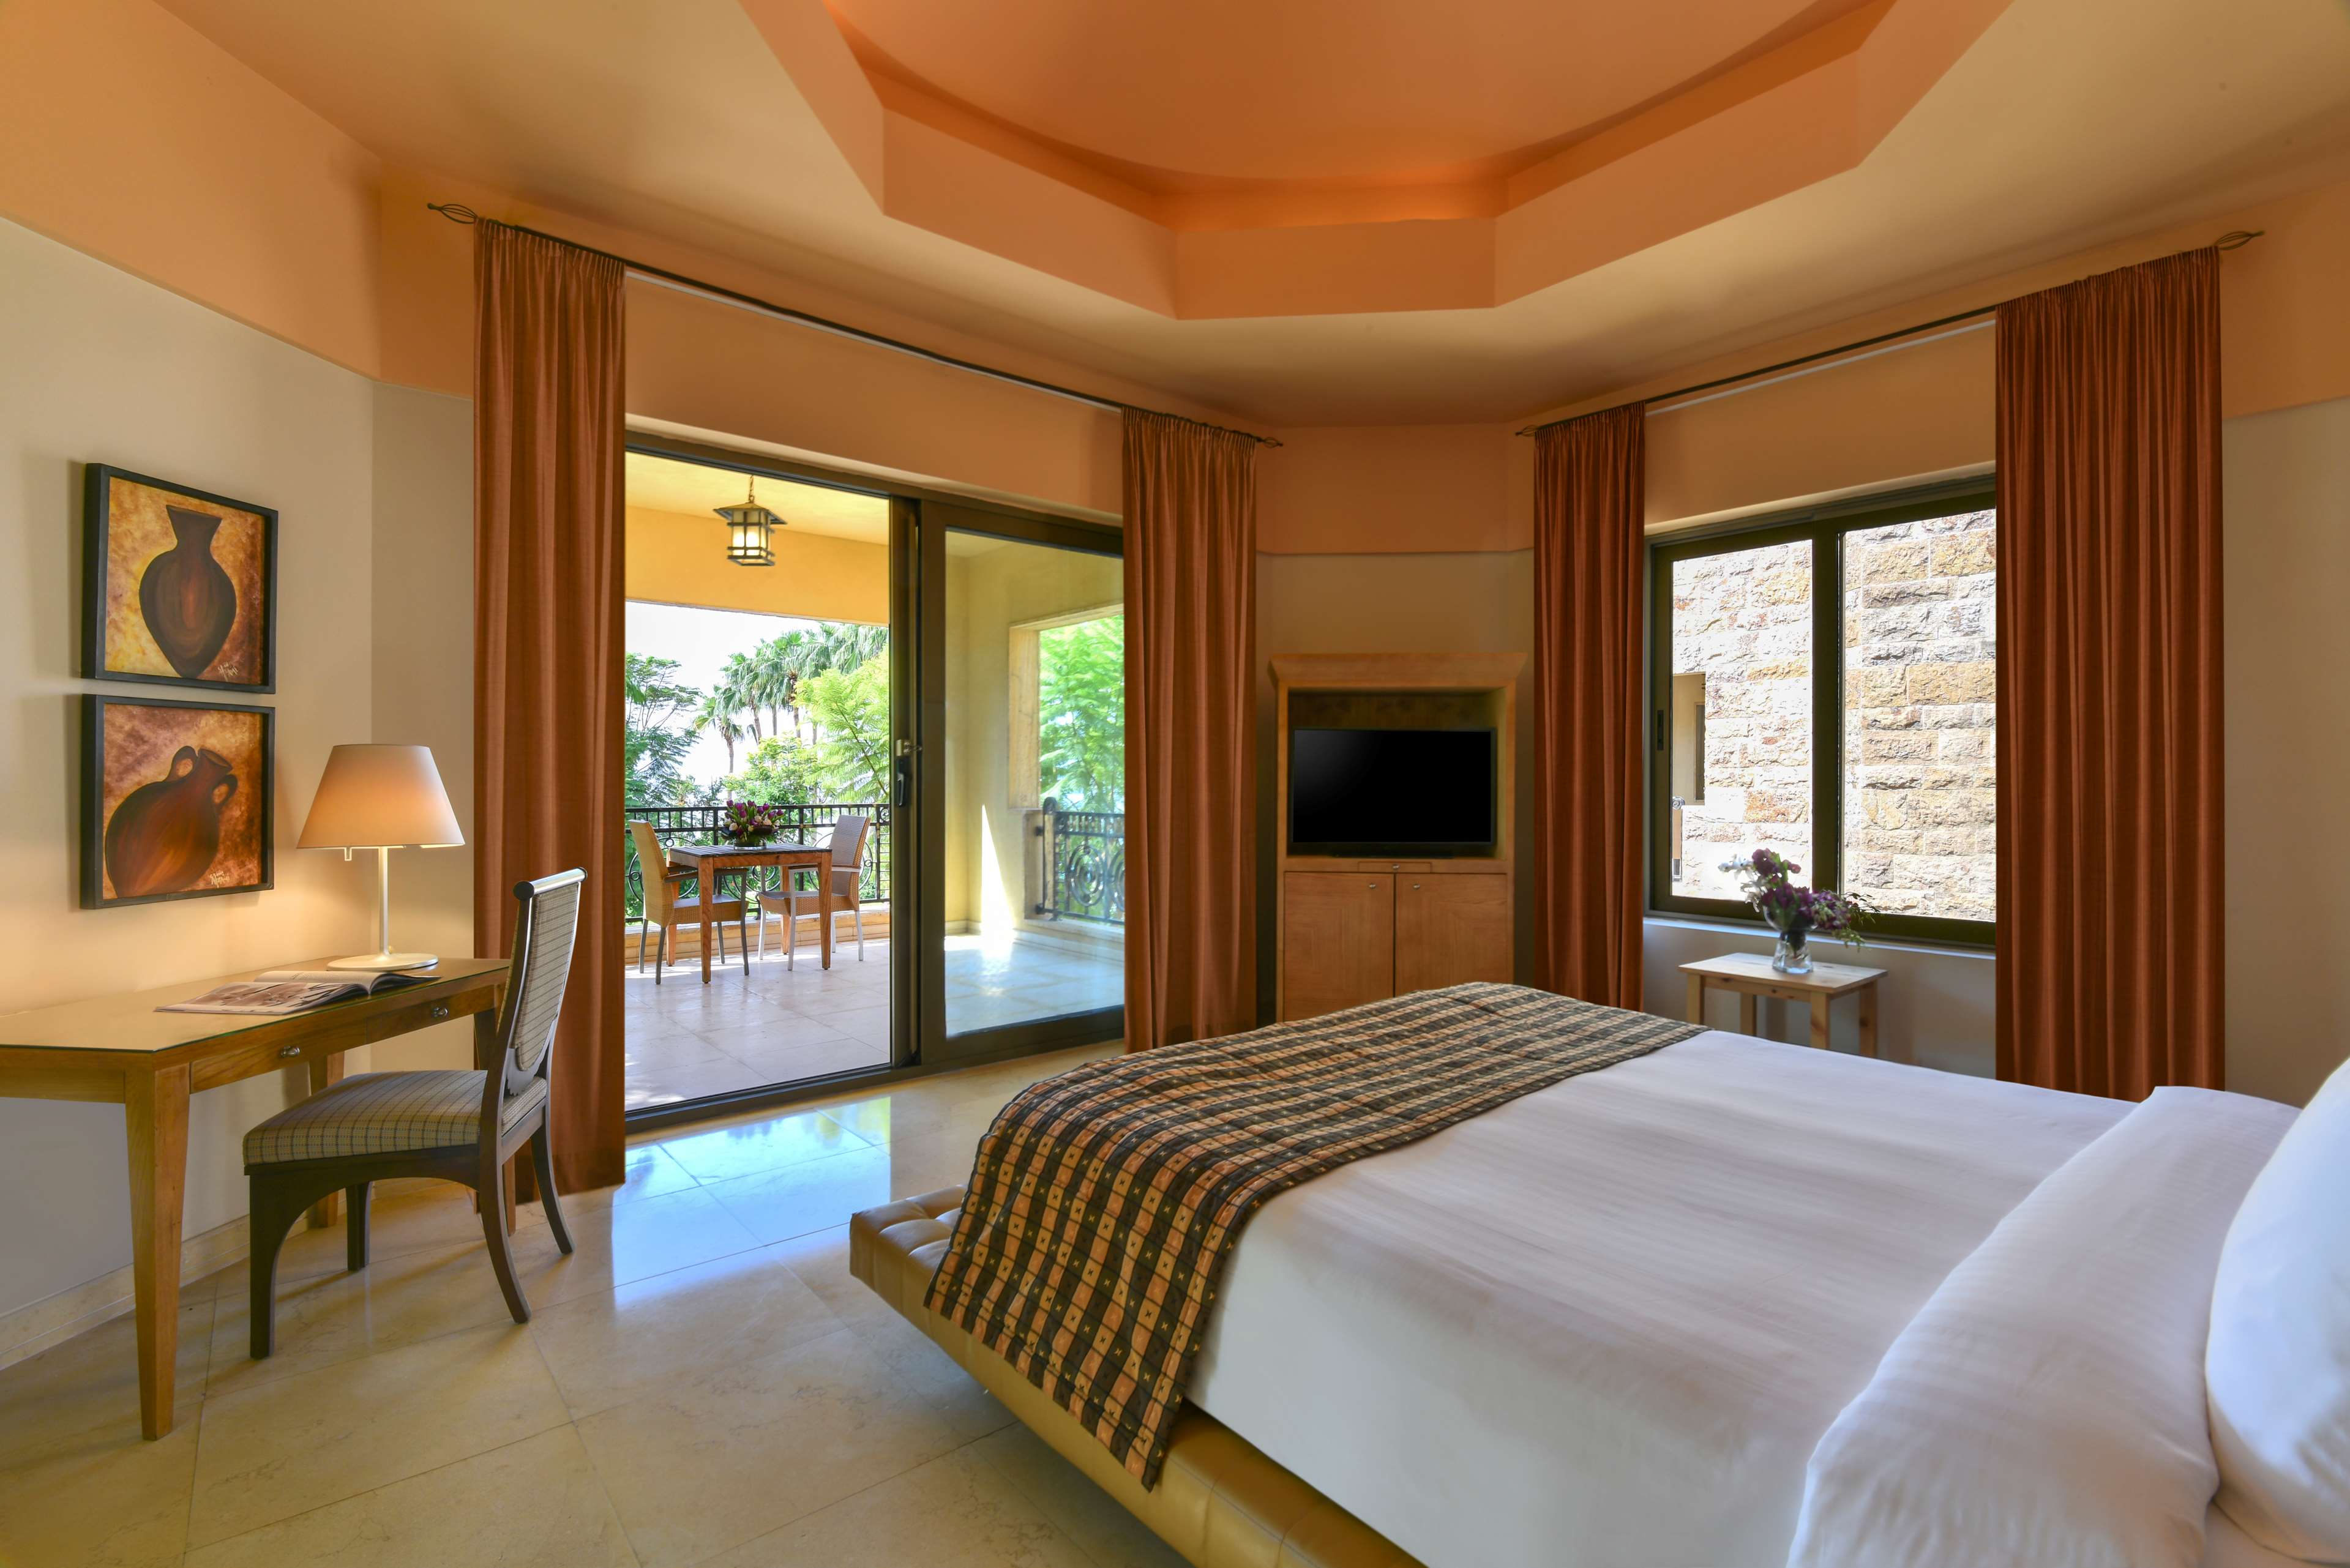 Bonus Virus Whirlpool 5 Star Luxury Hotel in Ishtar, Jordan|Kempinski Hotel Ishtar Dead Sea